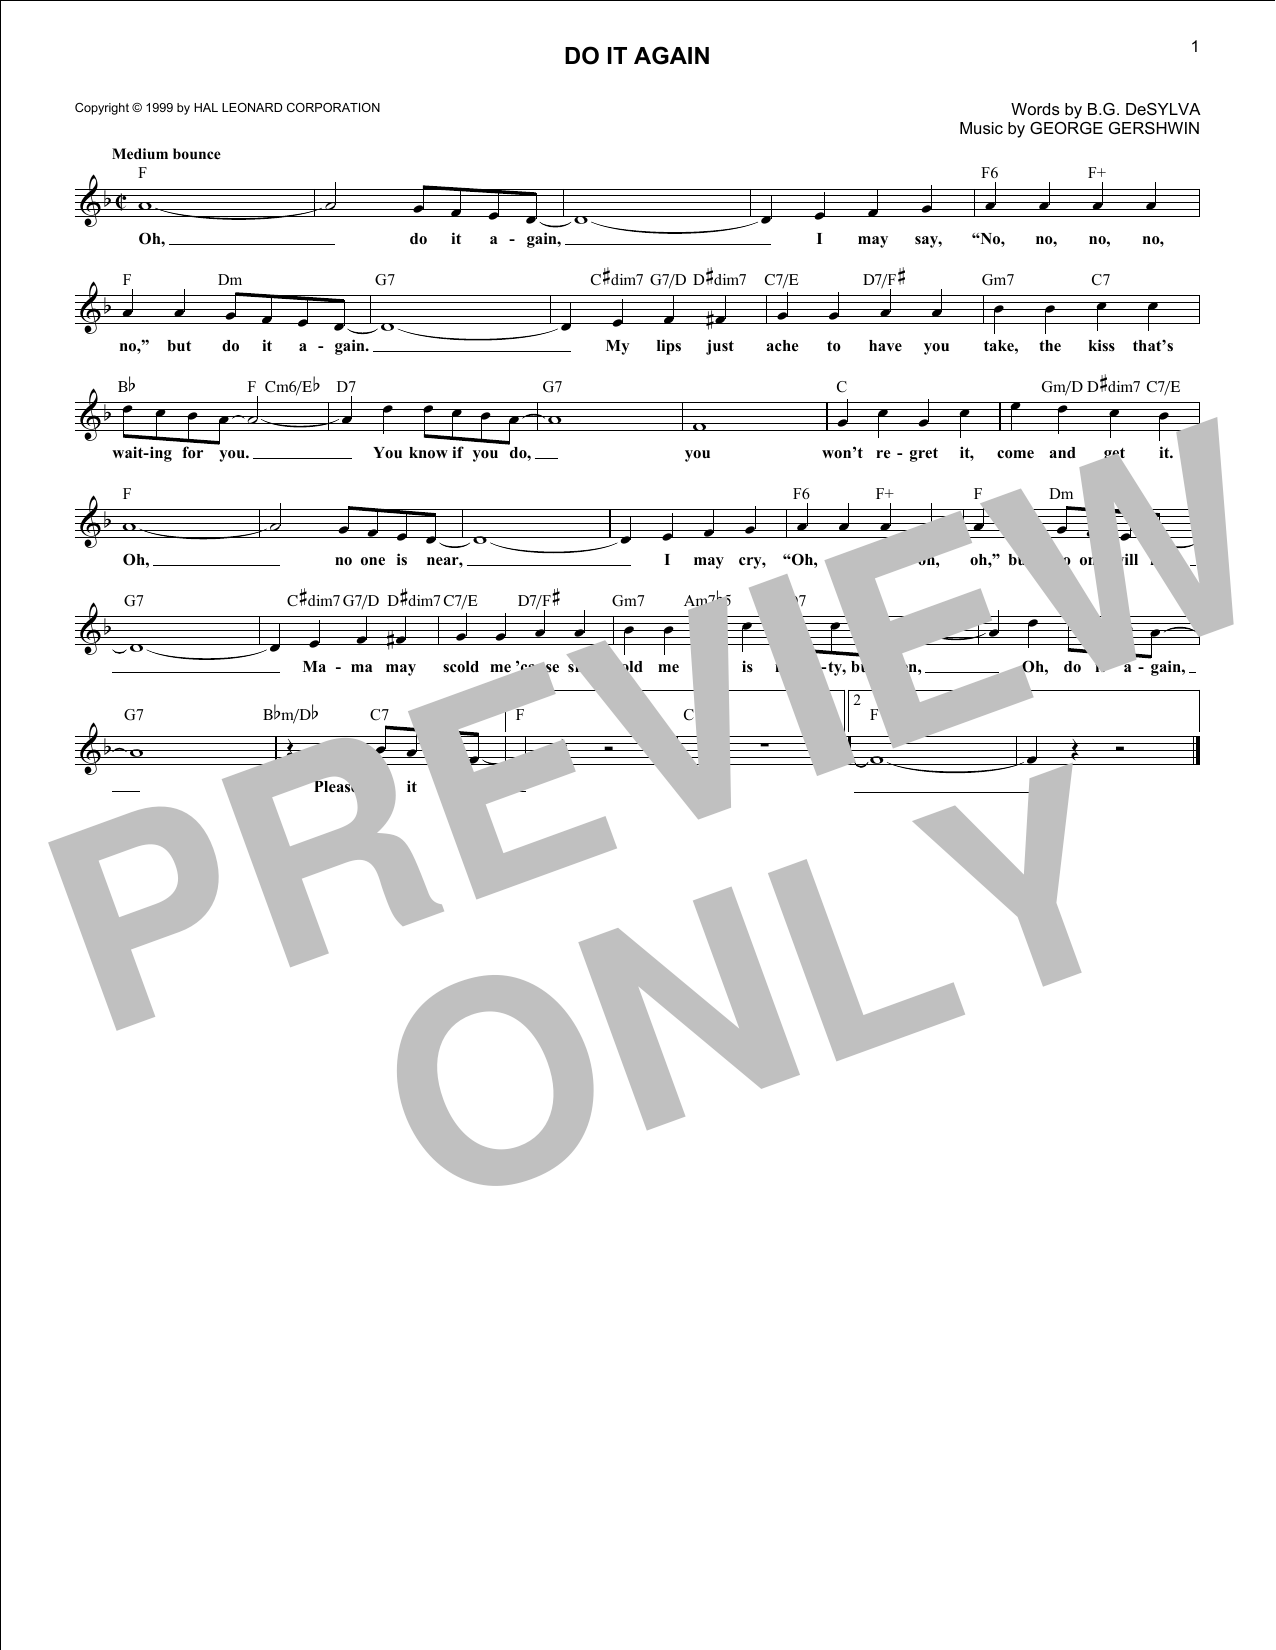 B.G. DeSylva Do It Again Sheet Music Notes & Chords for Melody Line, Lyrics & Chords - Download or Print PDF